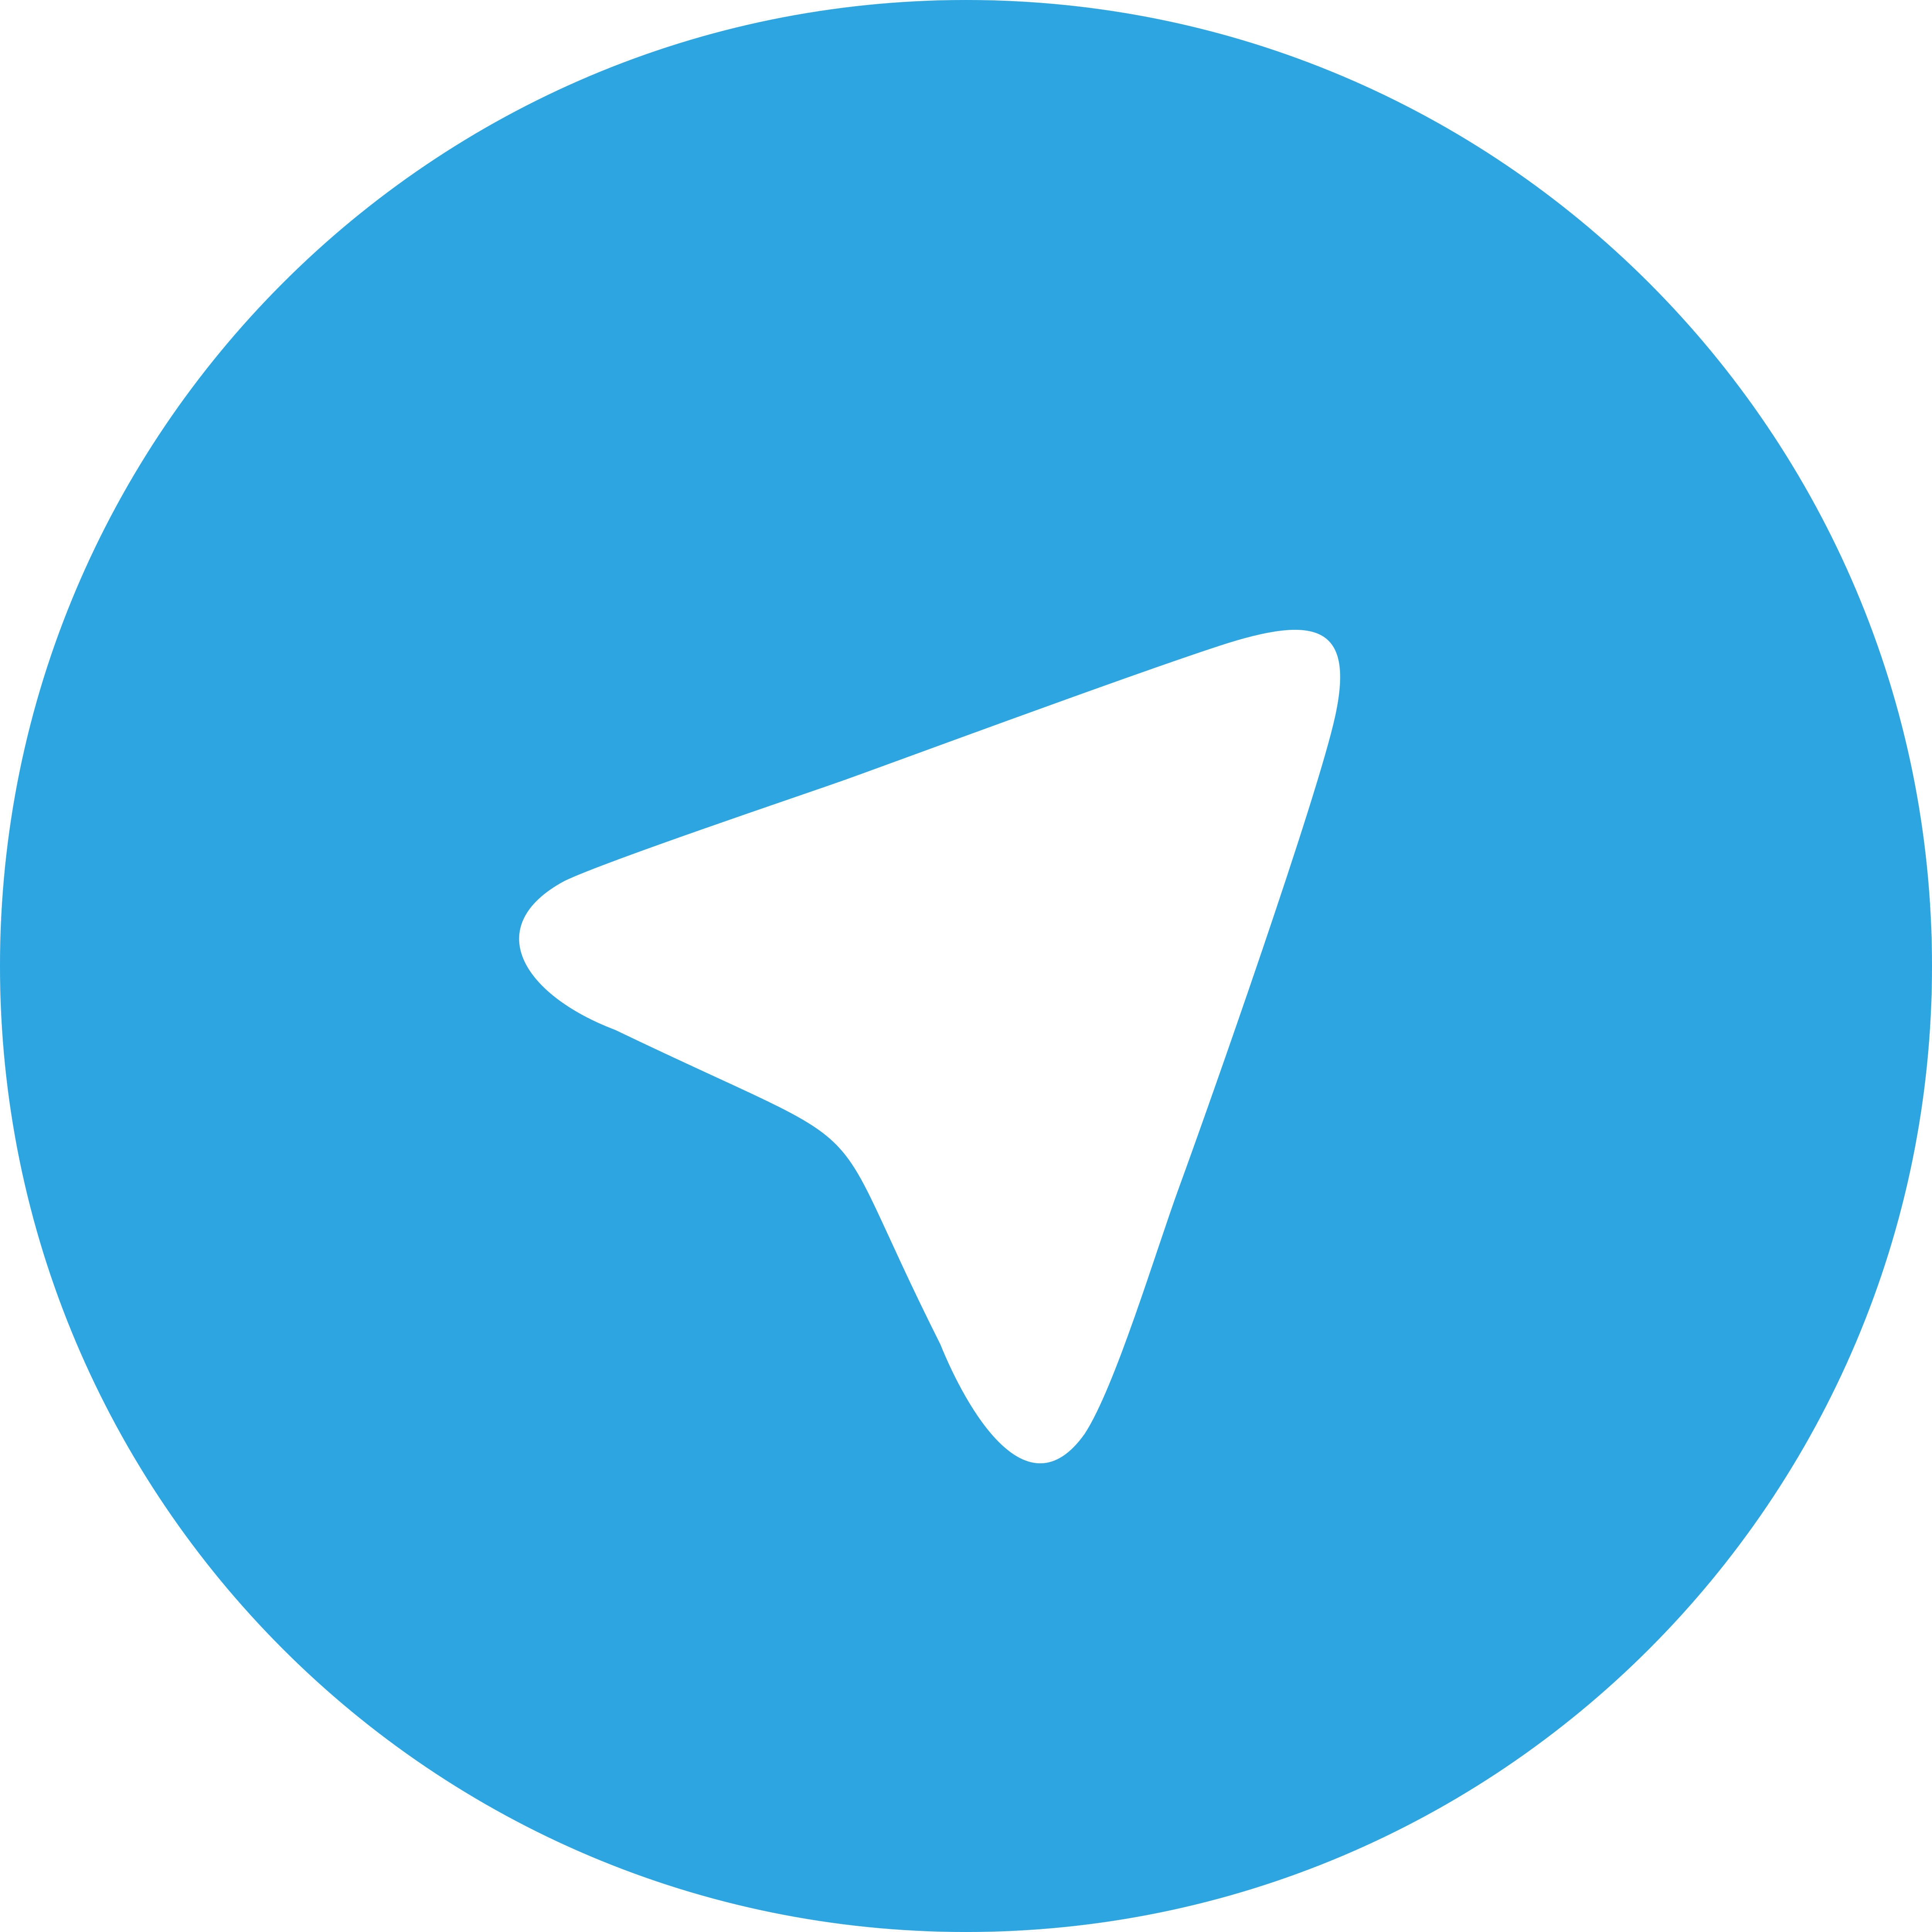 Telegram pictures. Значок tele. Телеграмм. Логотип телеграмм. Телега логотип.